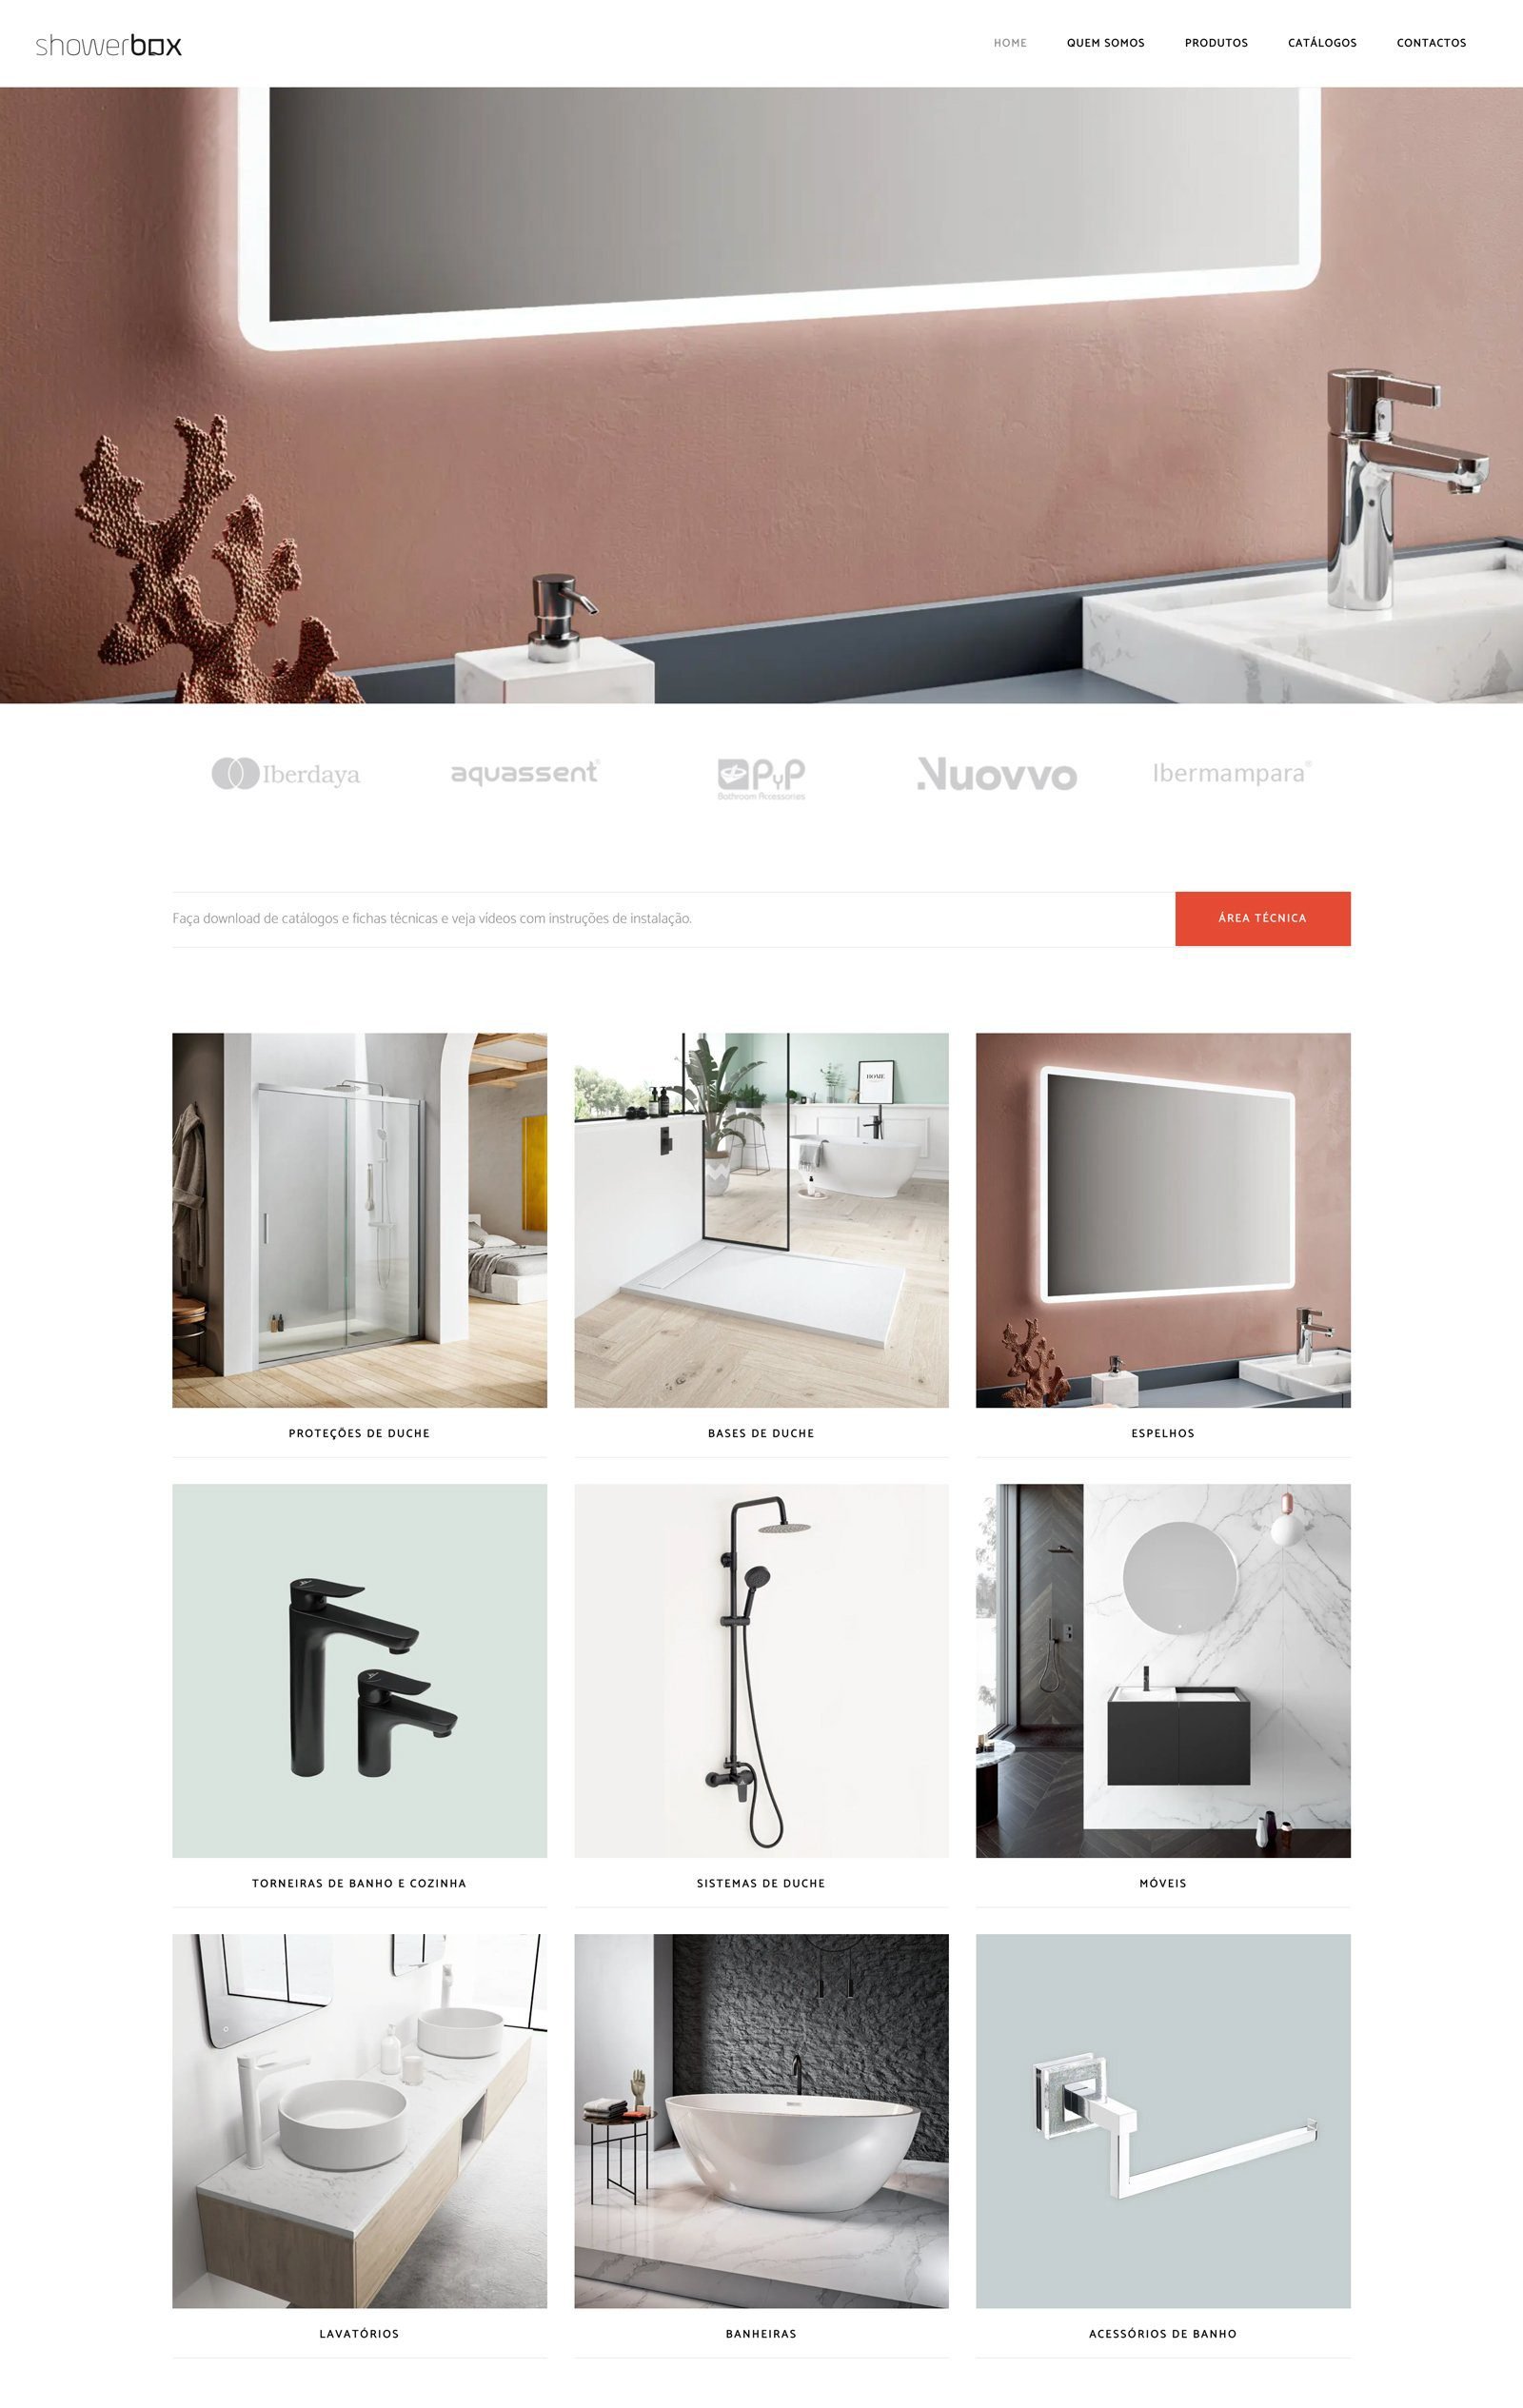 Showerbox Website | oneweb